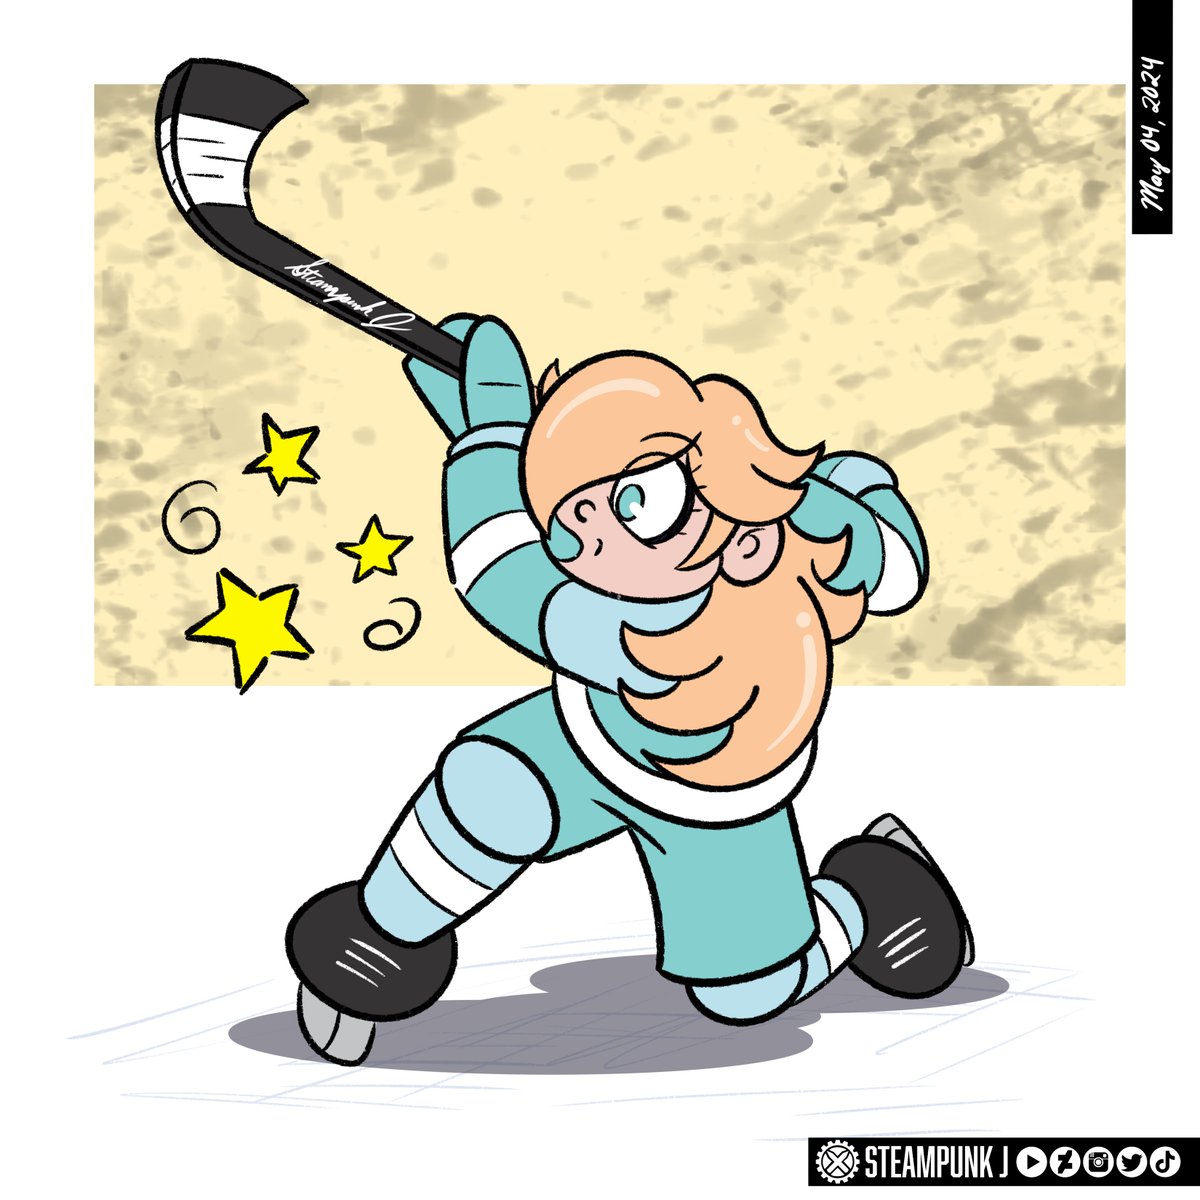 Princess Rosalina Hockey
#PrincessRosalina #nintendo #hockey #HockeyTwitter #ArtistOnTwitter #drawing #drawingoftheday #procreate #procreateart #digitalart #DigitalArtist #digitalpainting #illustration #SuperMarioBros